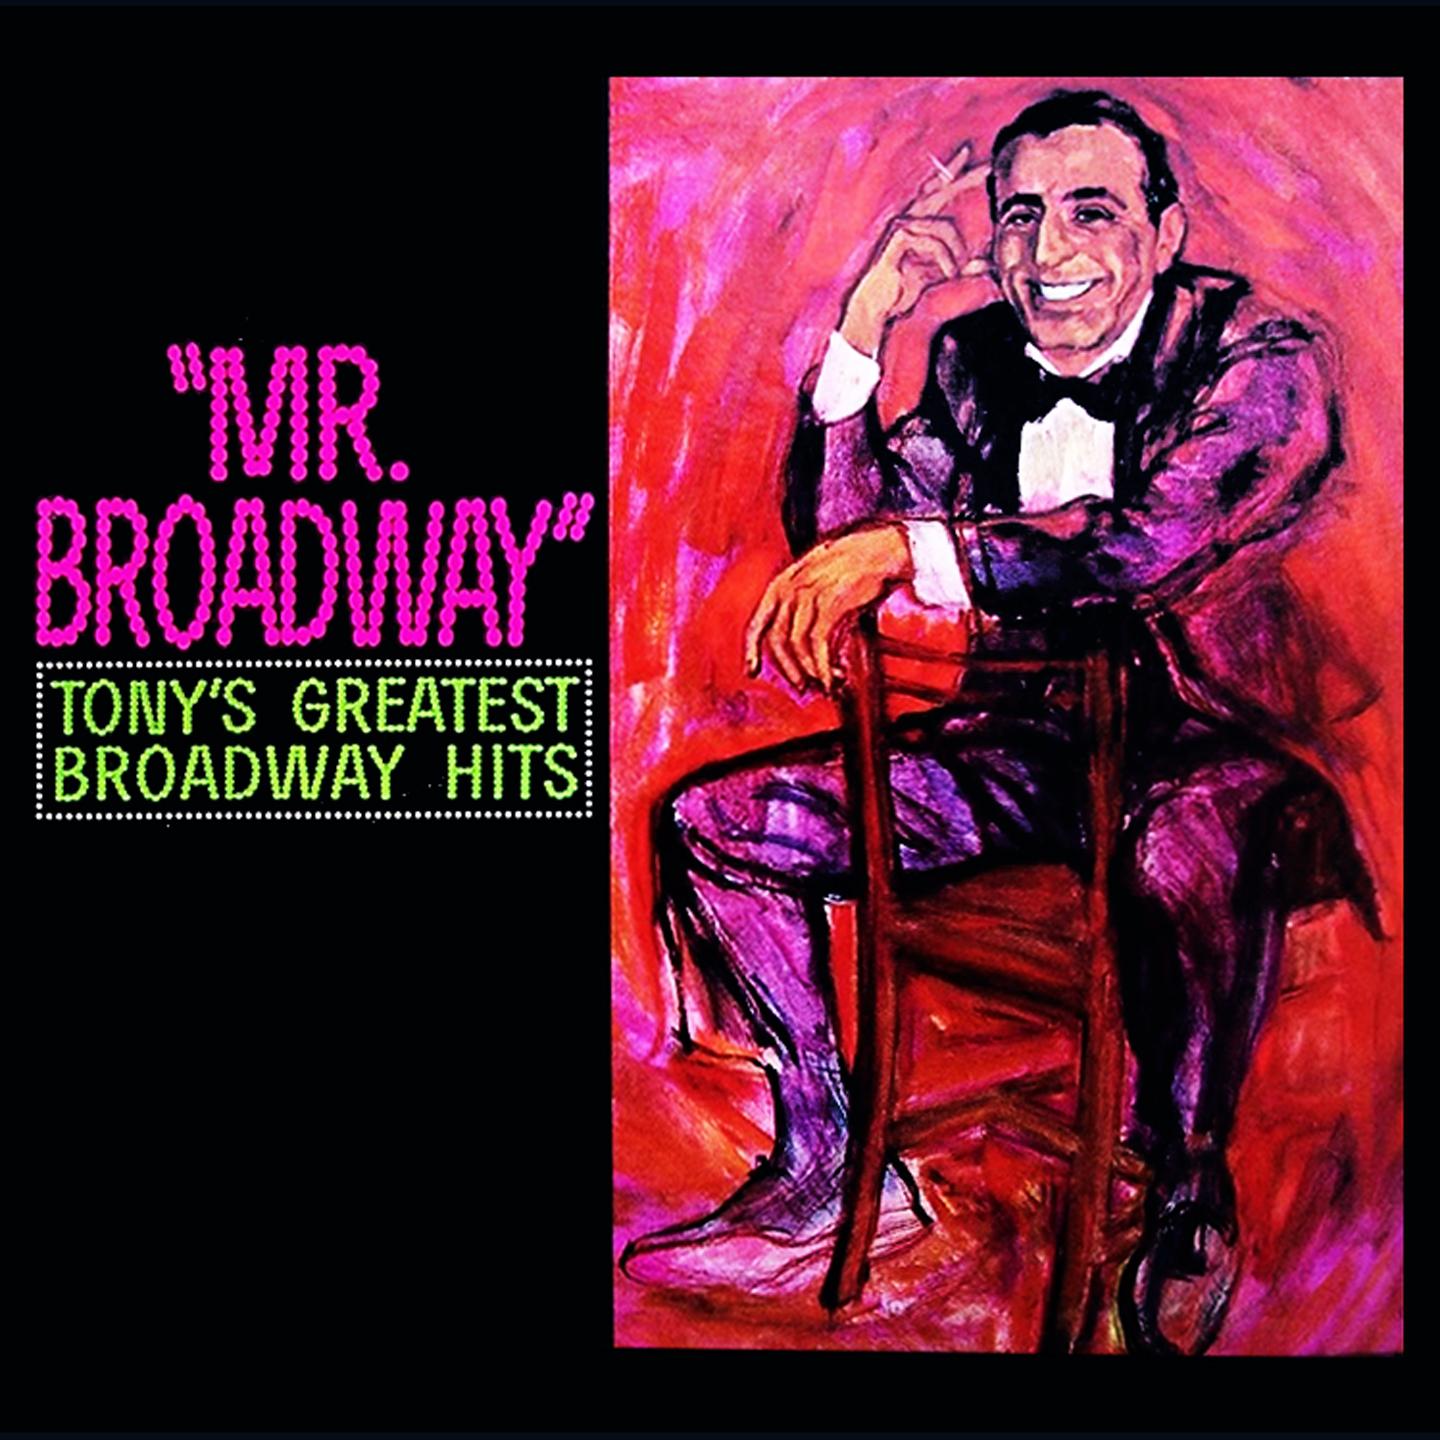 Mr. Broadway (Tony Bennett's Greatest Broadway Hits)